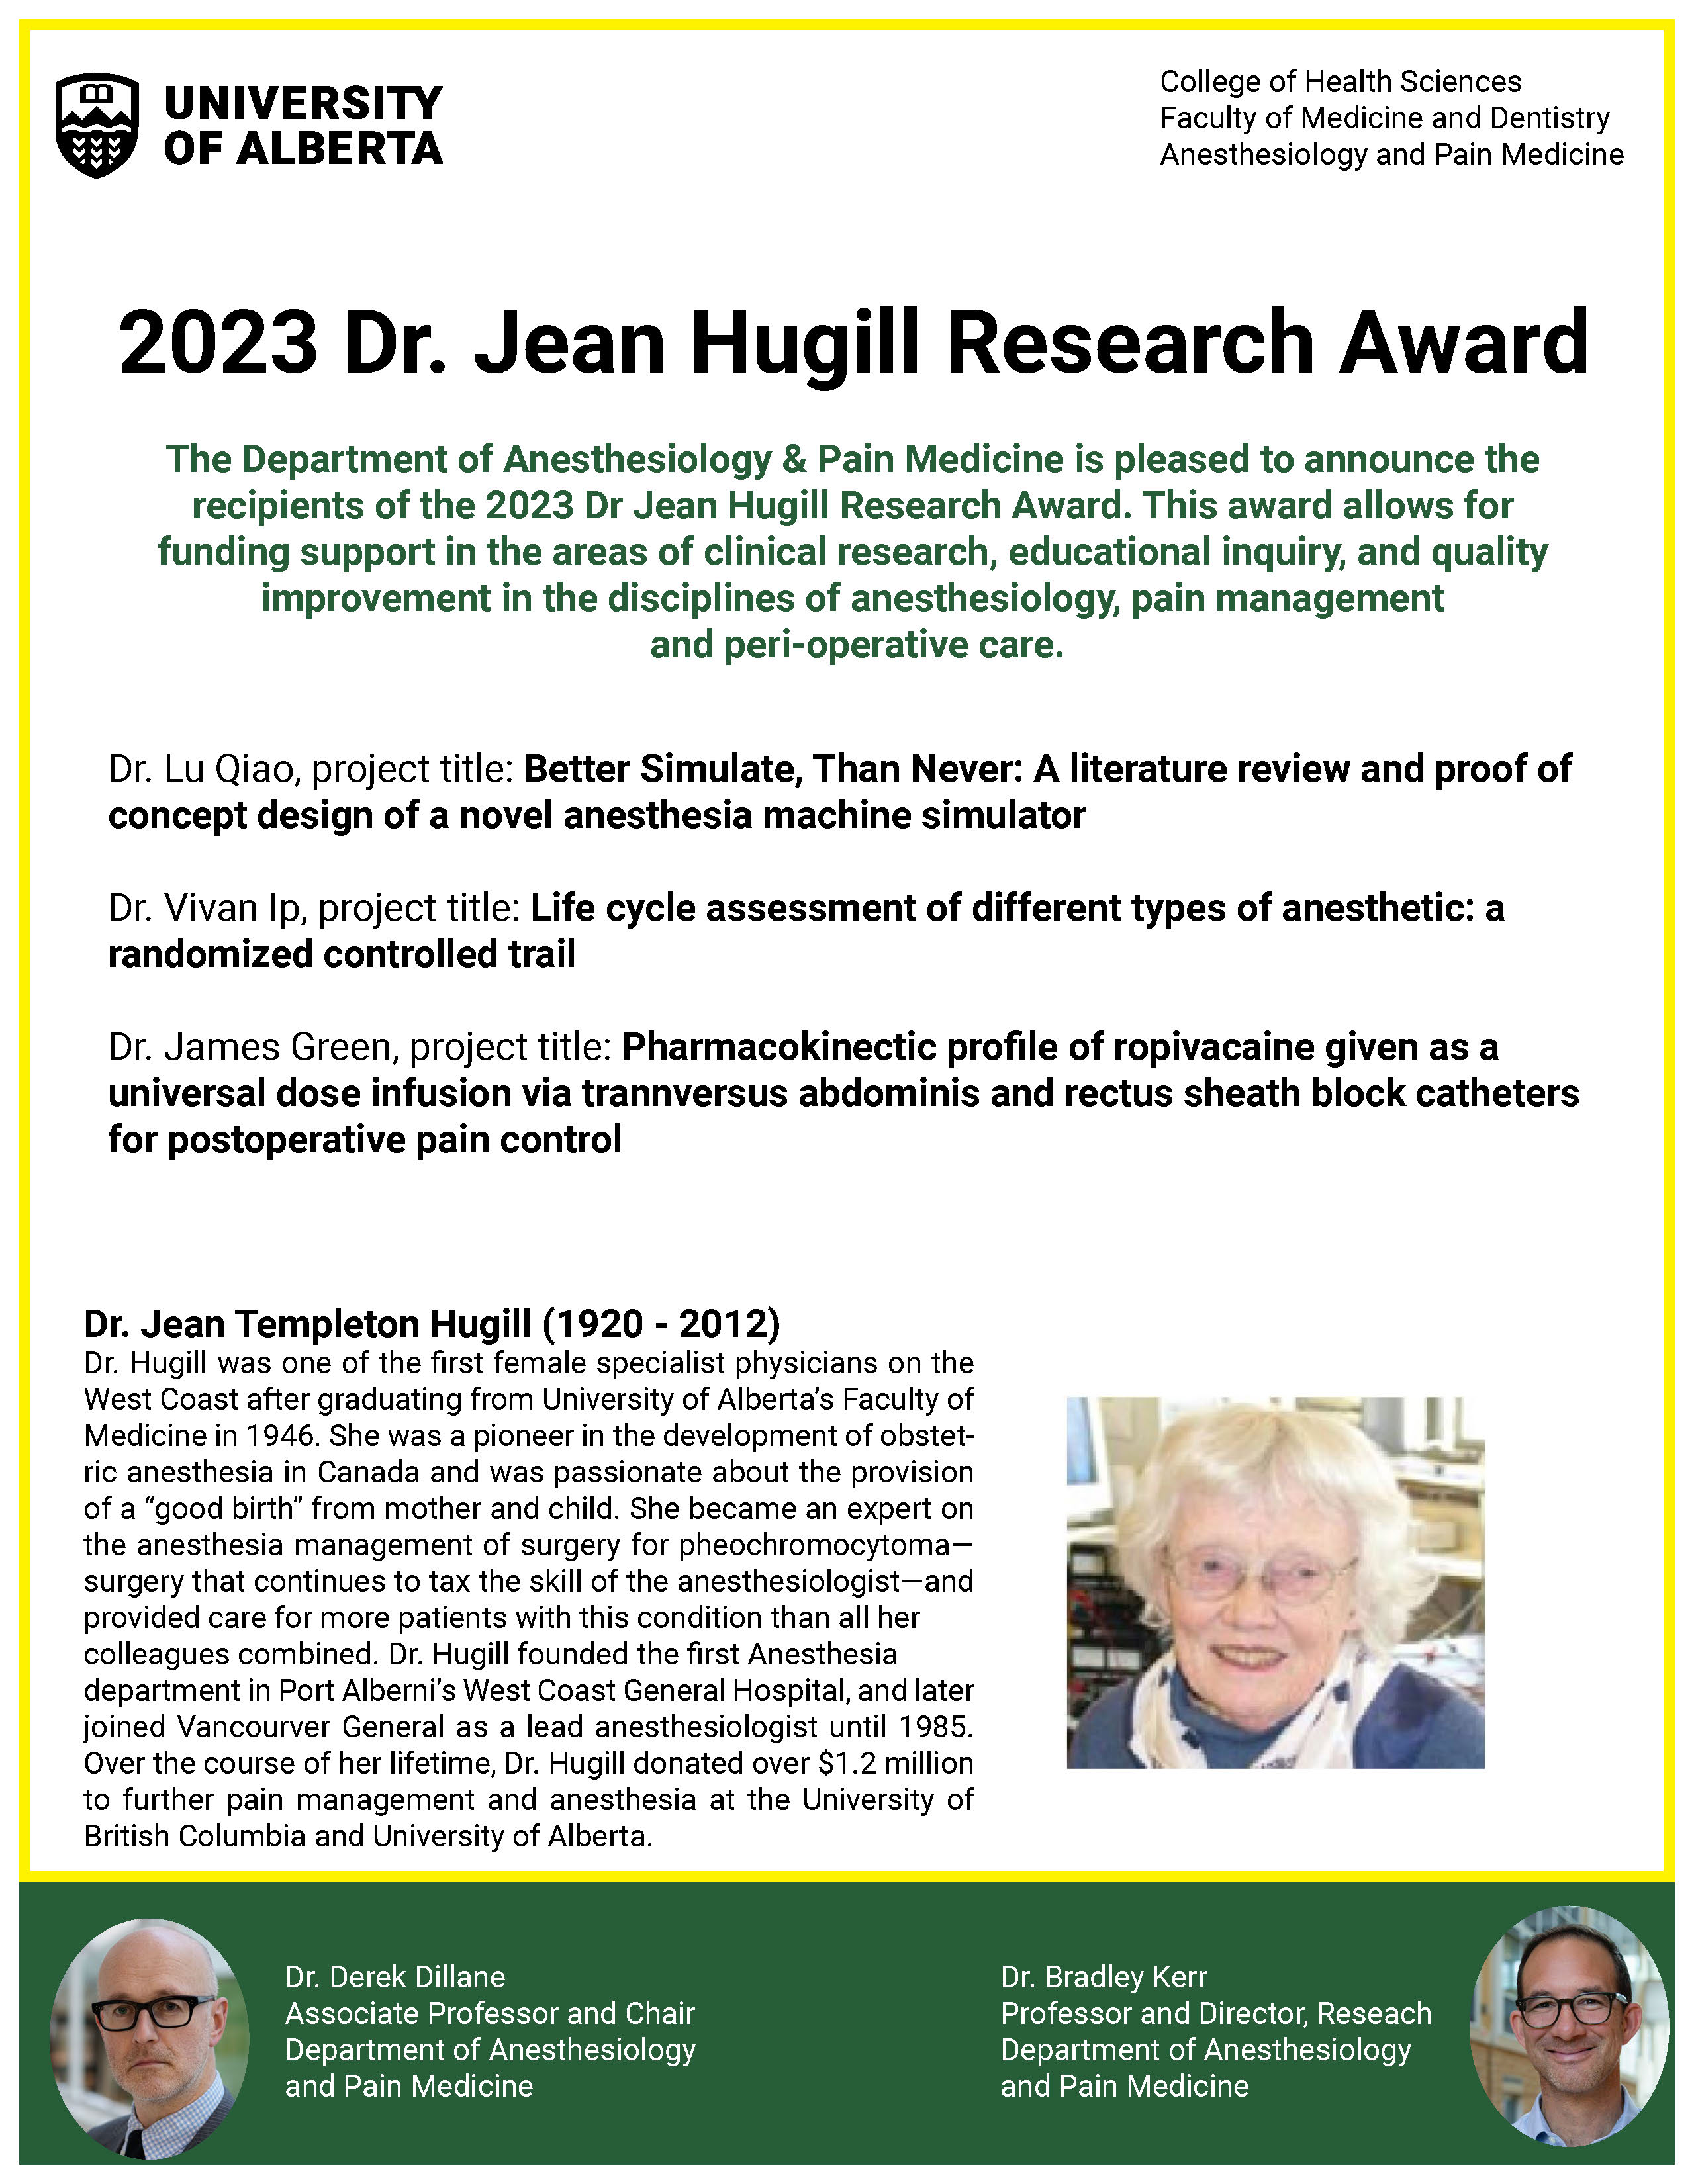 2023 Dr. Jean Hugill Research Award Recipients